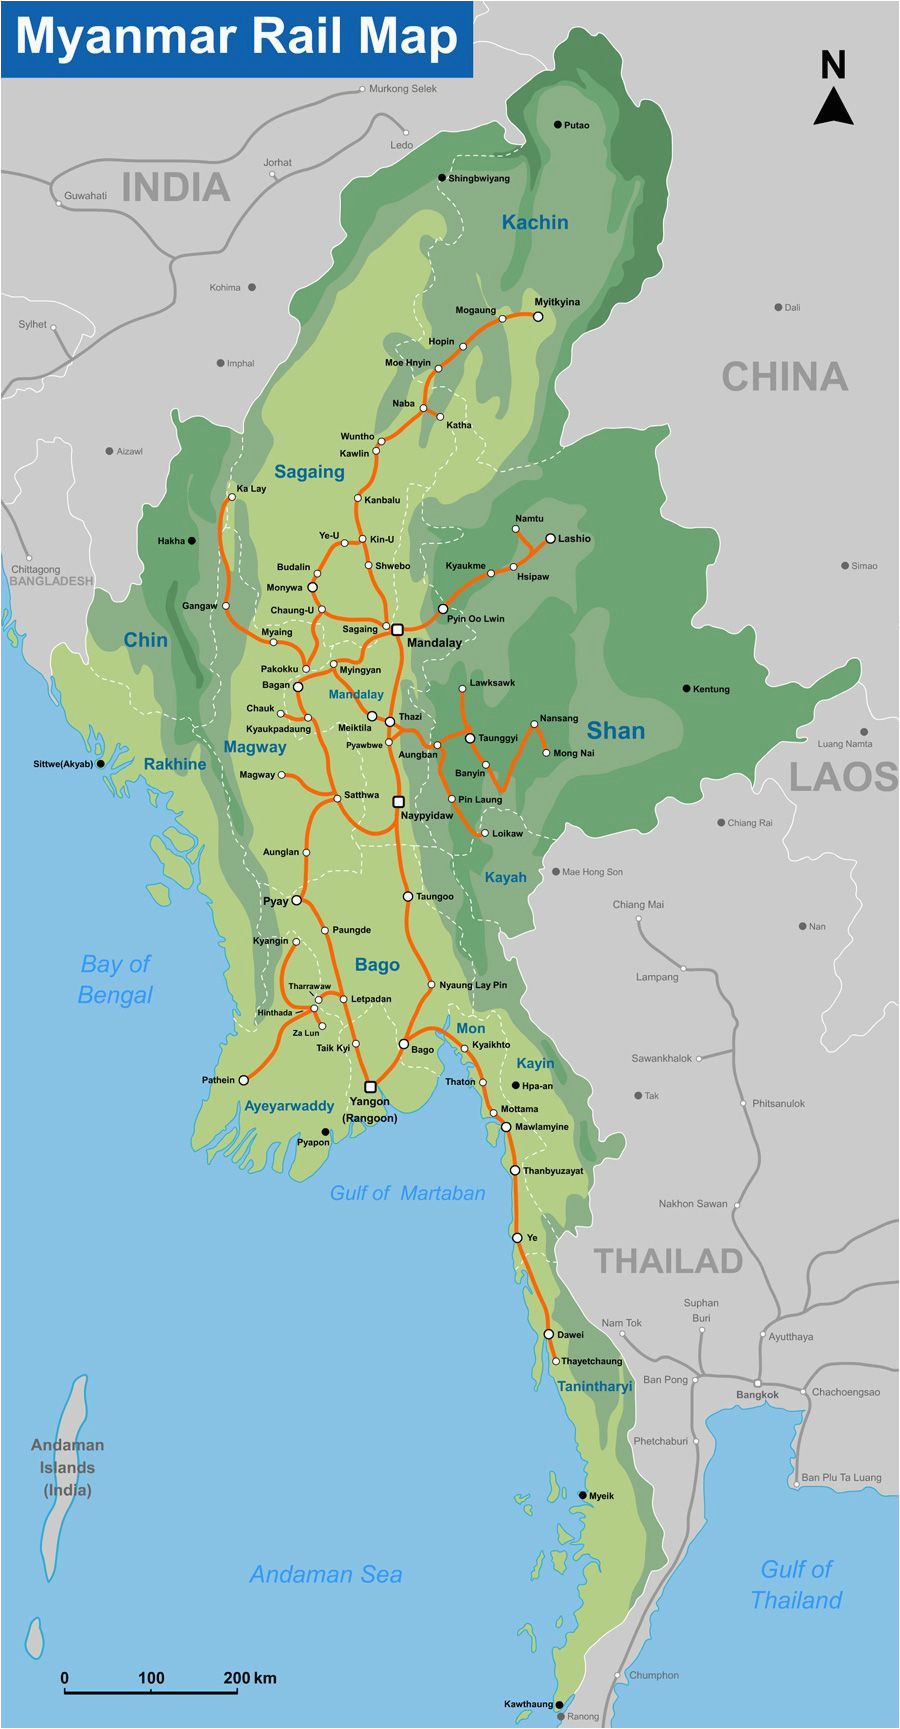 myanmar rail map by seacitymaps com southeast asia railways in